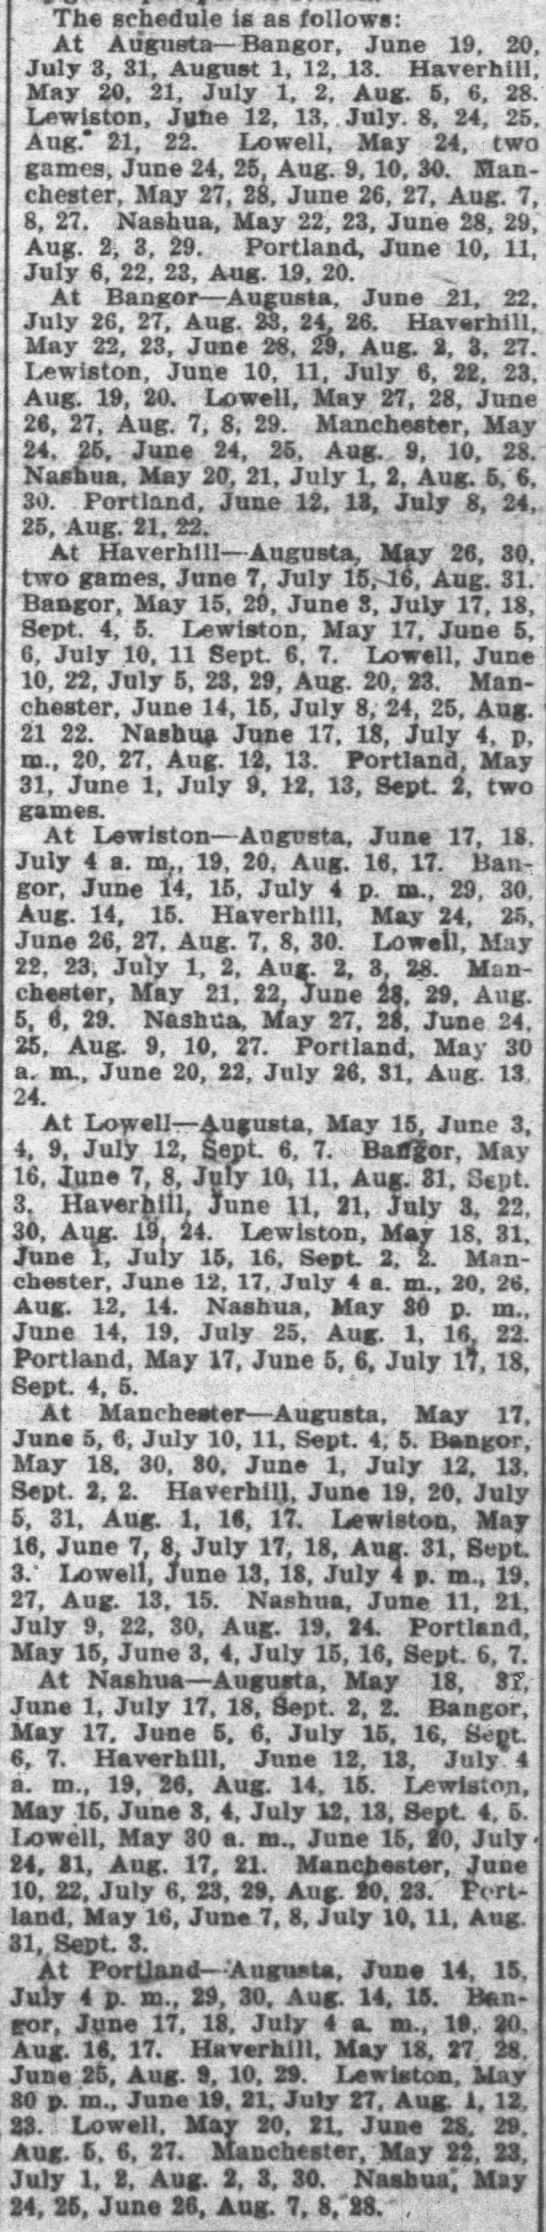 1901 New England League schedule - 